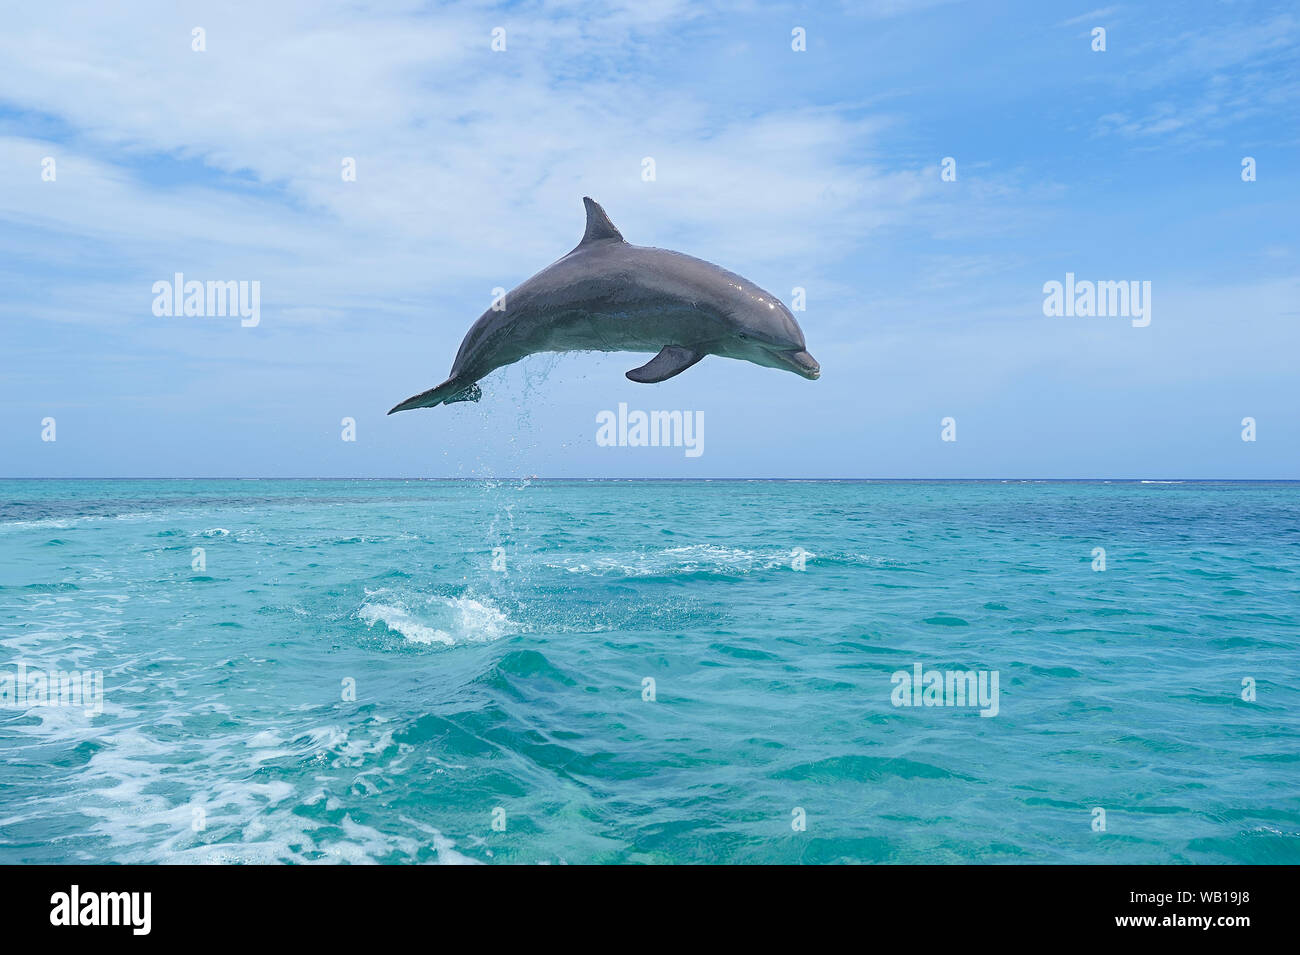 Honduras, Roatan, bottlenose dolphin il salto in aria Foto Stock